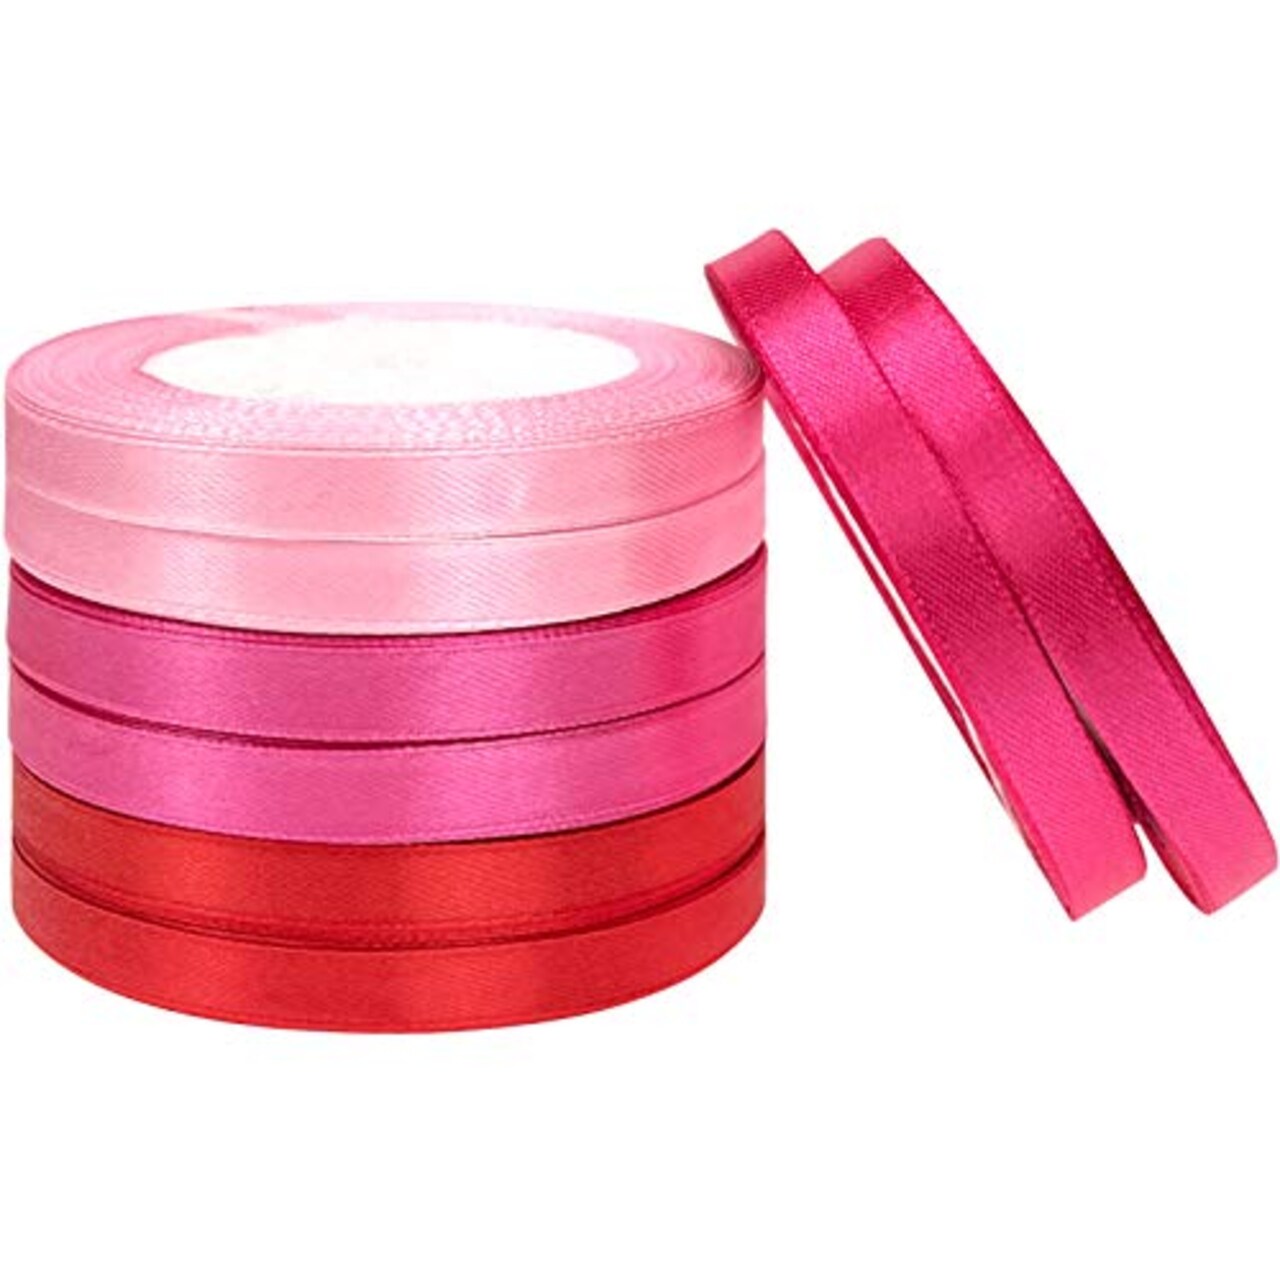 Llxieym Valentine's Day Satin Ribbon Gift Wrapping Ribbon for Valentine's  Day Wedding Crafts Decoration DIY Supplies, 0.39 Inch Wide (red, Rose,  Peach, Pink)